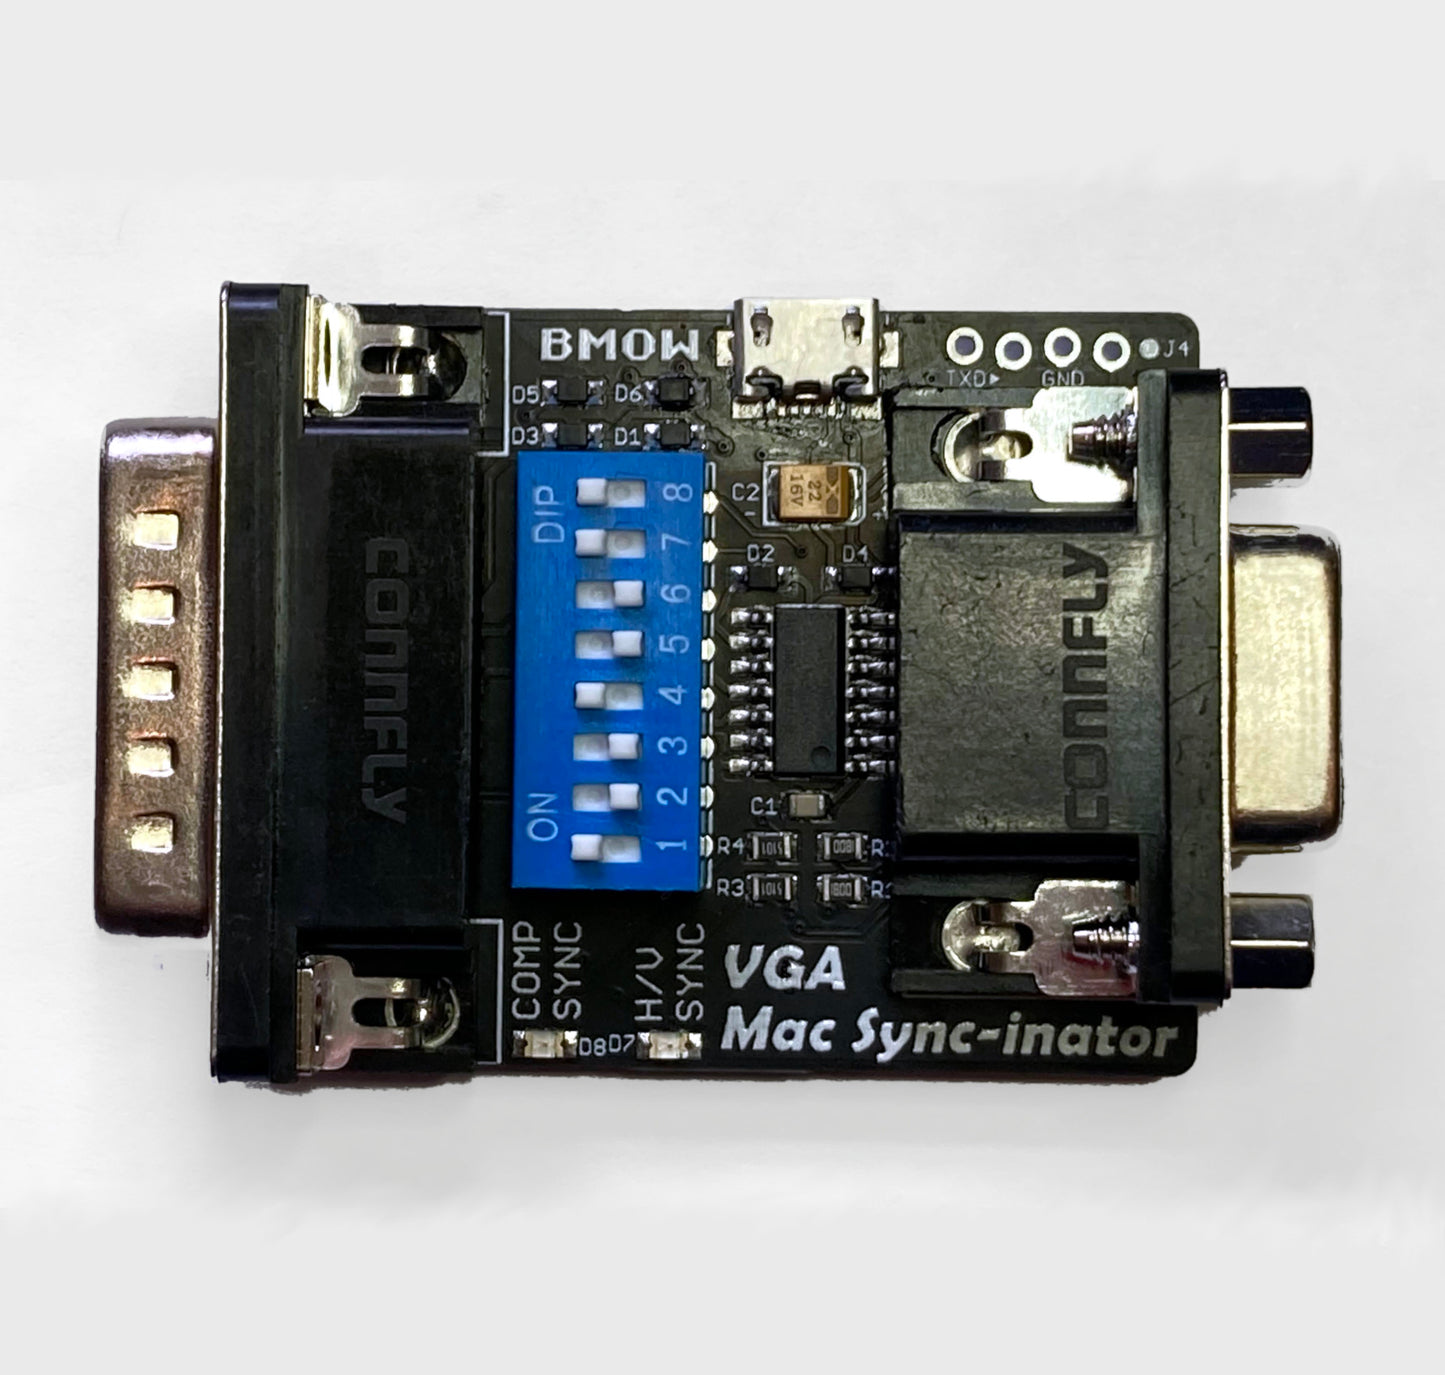 Mac Sync-inator VGA Sync Converter